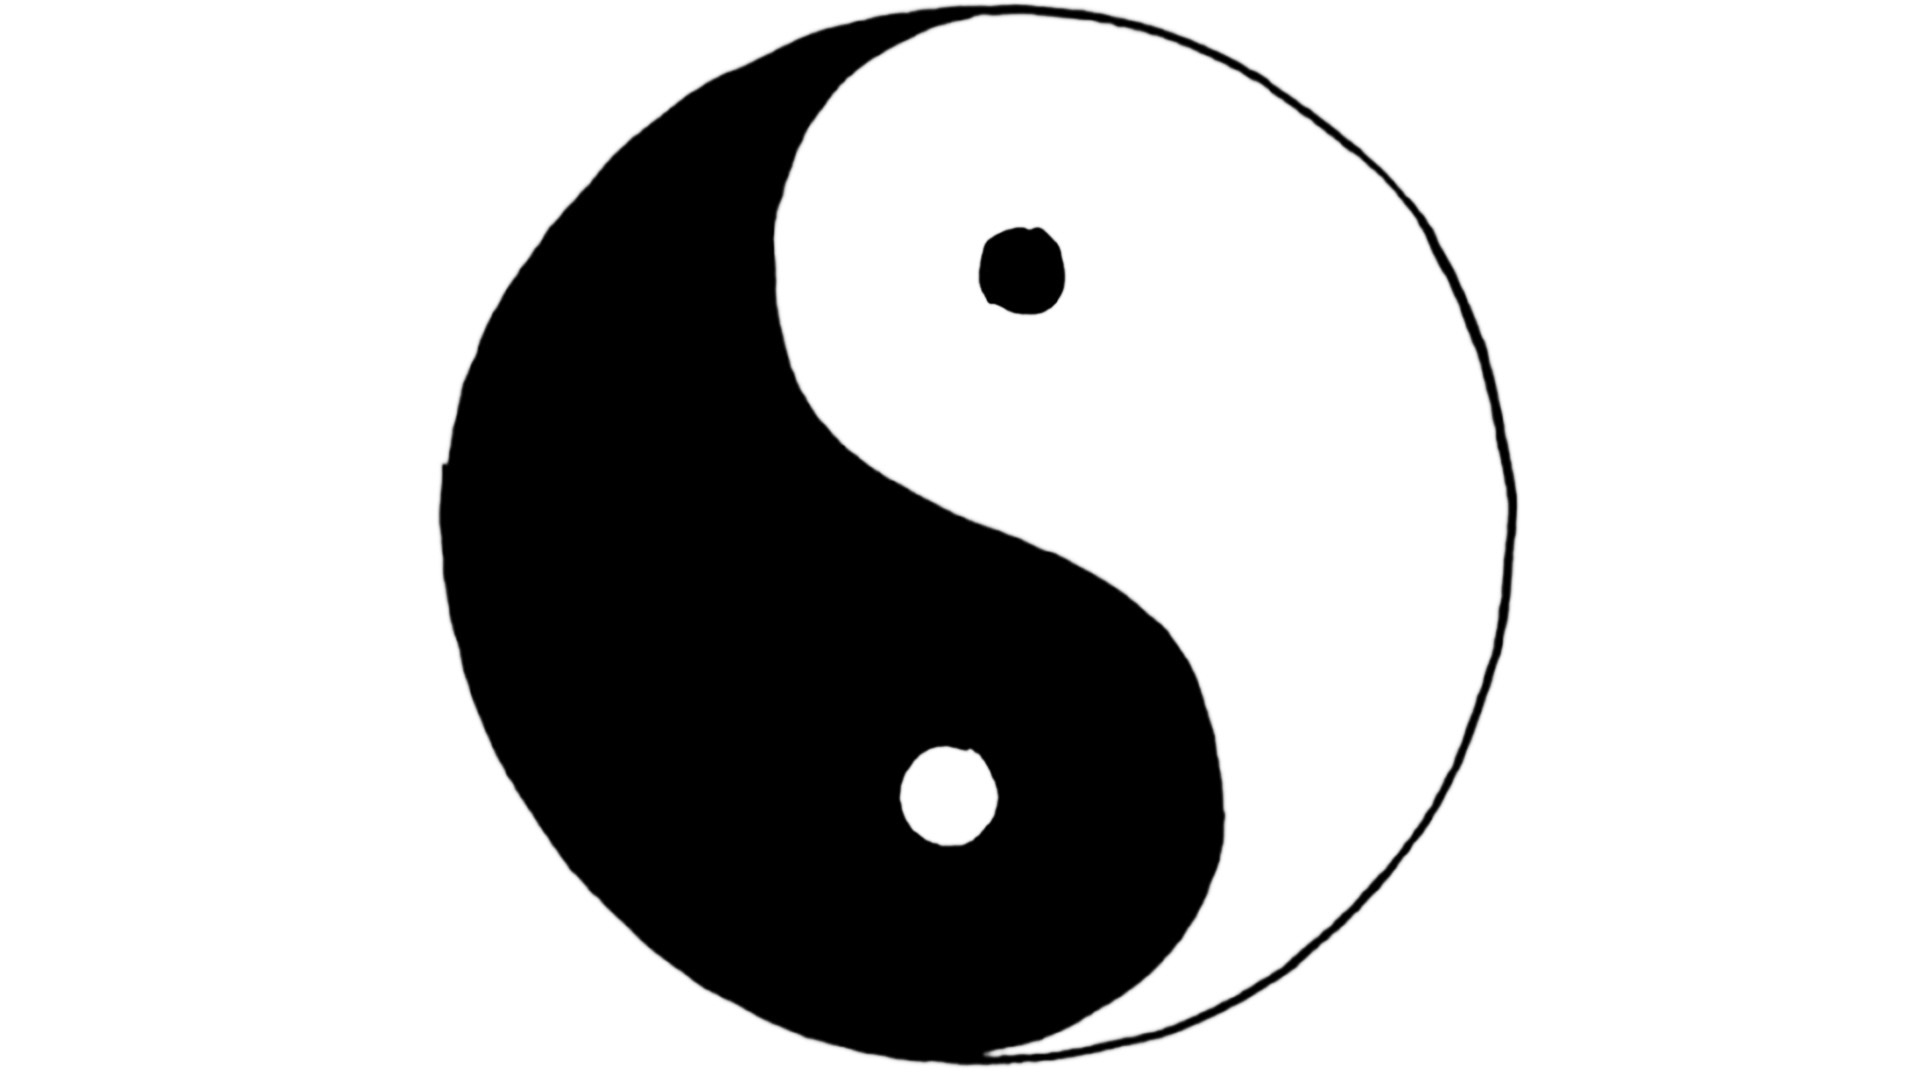 Yin Yang sign â?¯ (how to make Ying-Yang symbol on your keyboard)